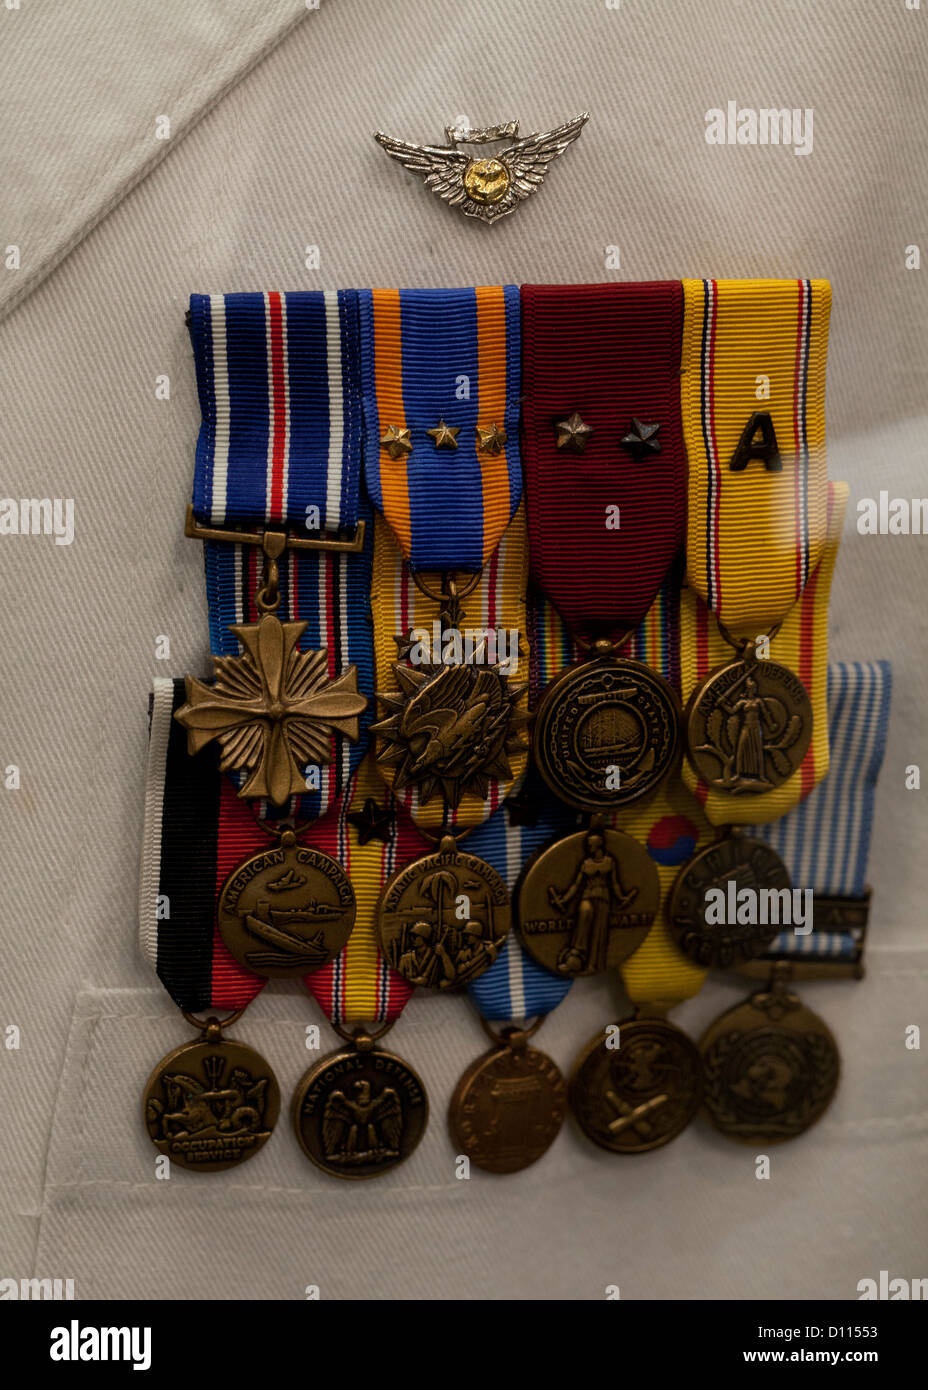 Antique US Navy medals on Service Dress White Uniform Stock Photo - Alamy